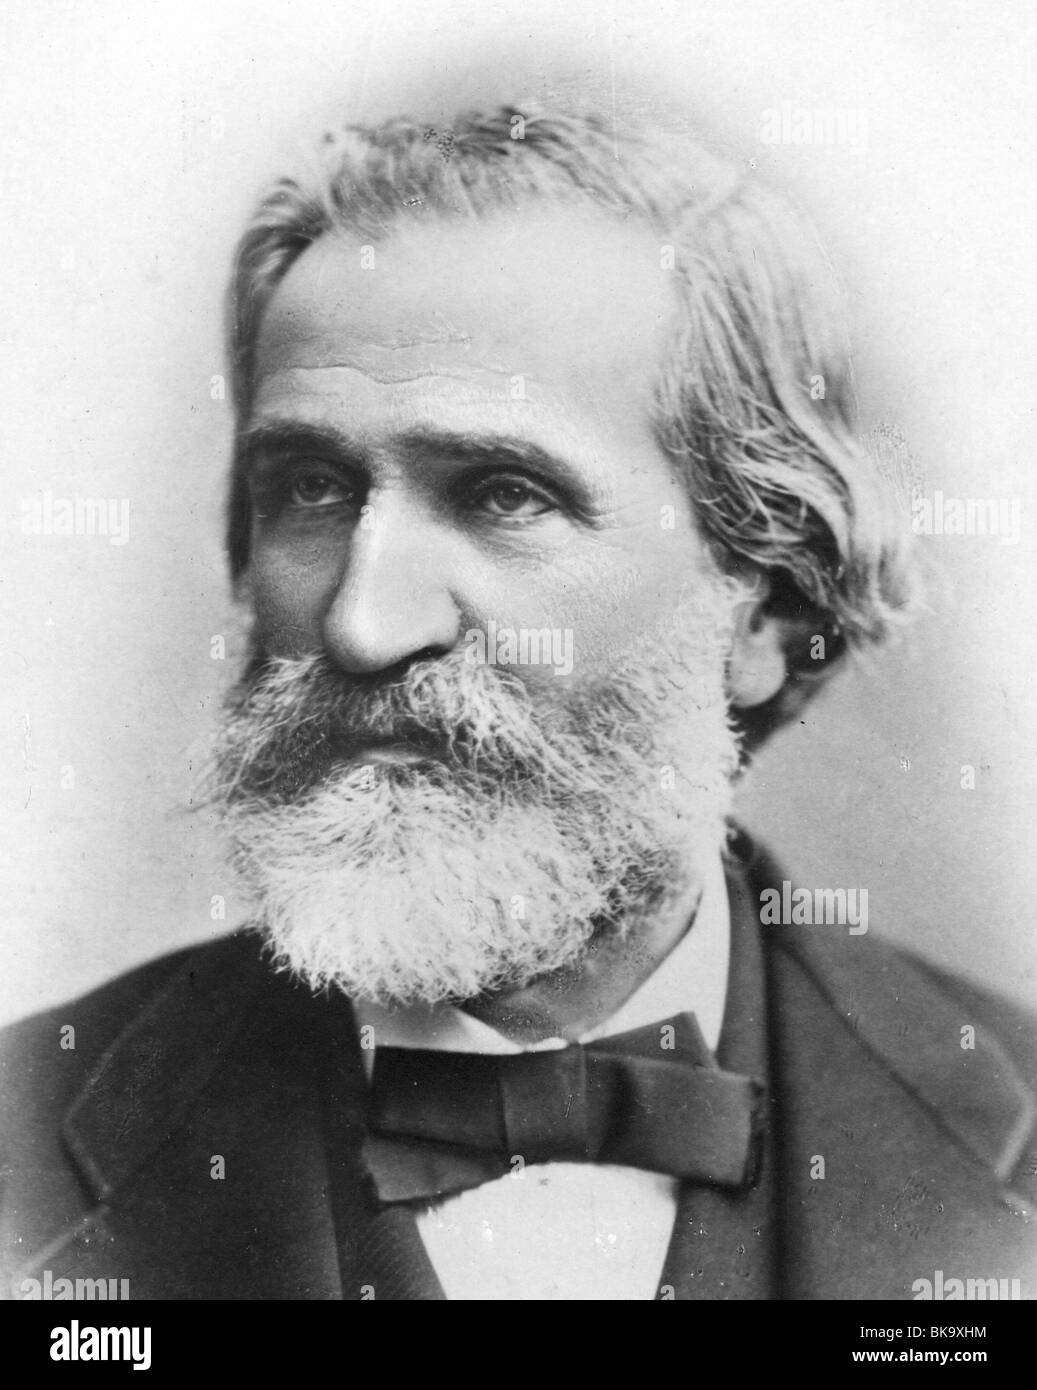 GIUSEPPE VERDI - Italian composer (1813-1901) Stock Photo